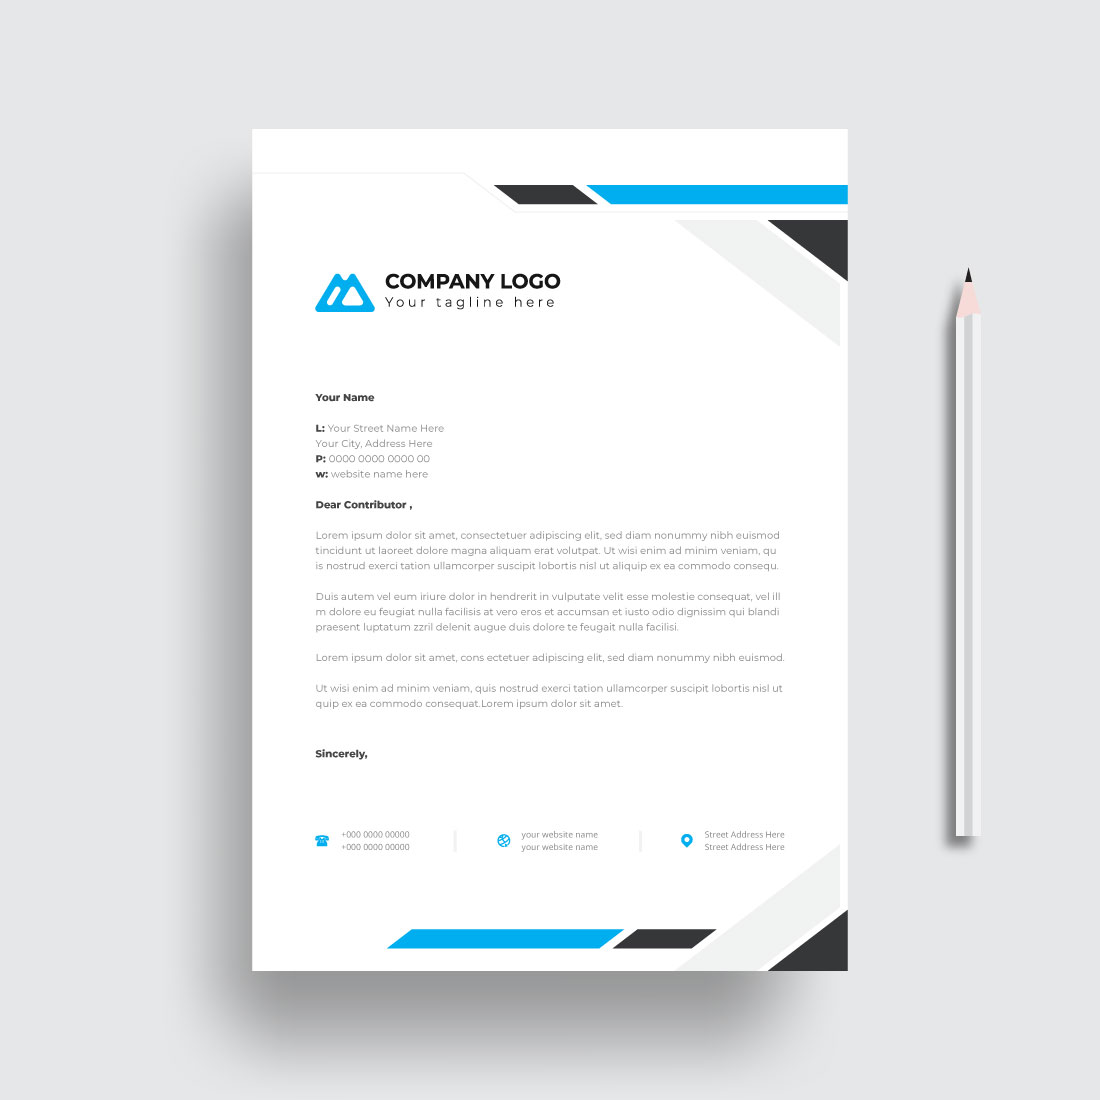 letterhead business corporate template design cover image.